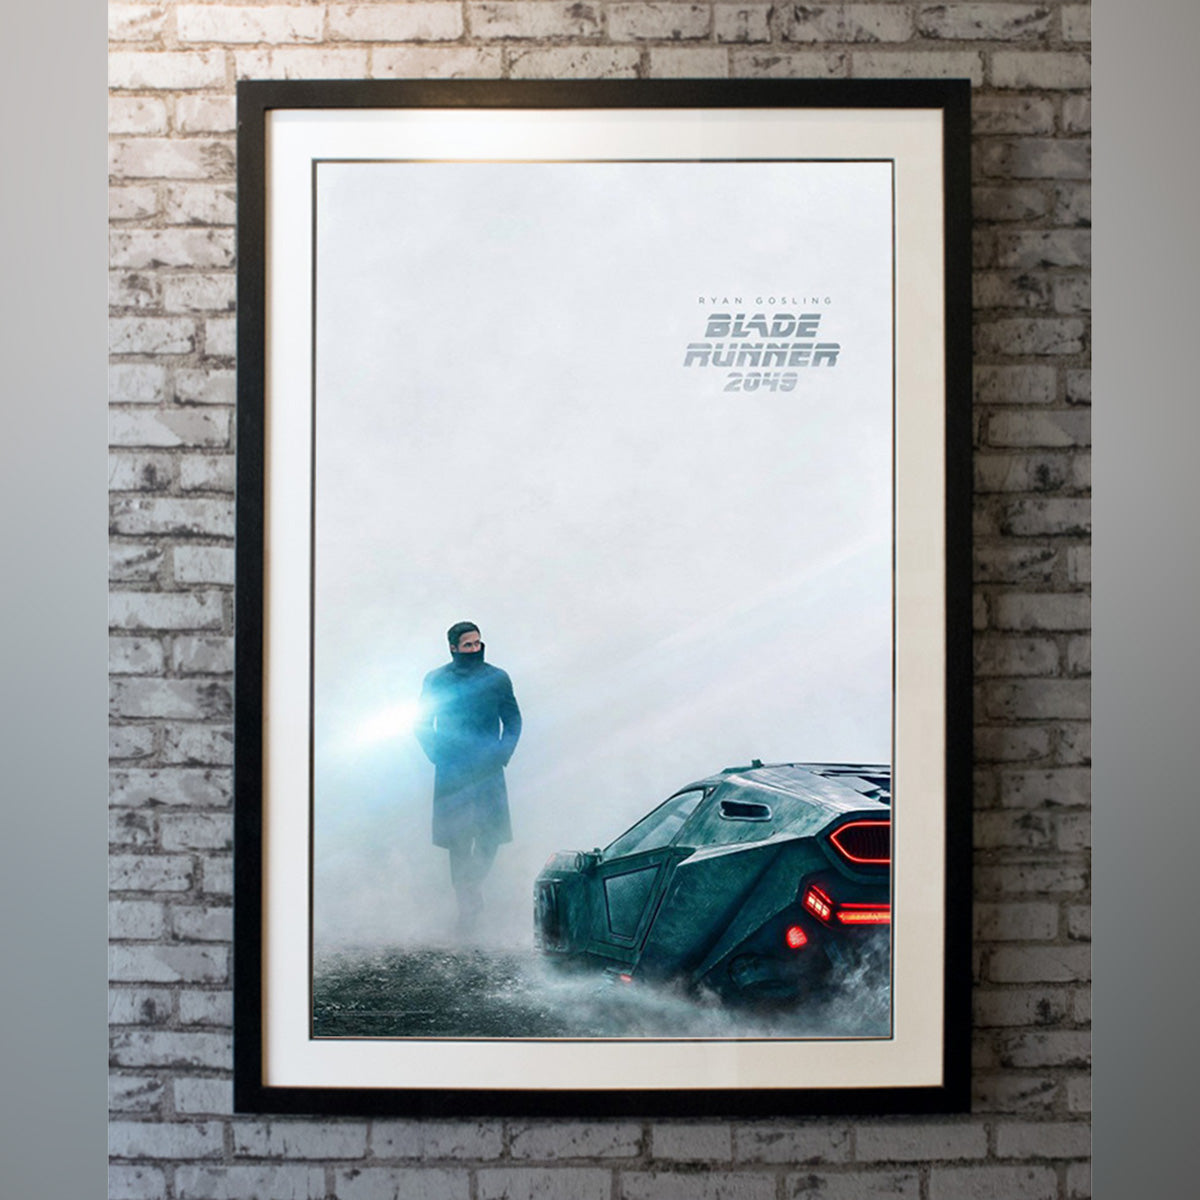 Original Movie Poster of Blade Runner 2049 (2017)